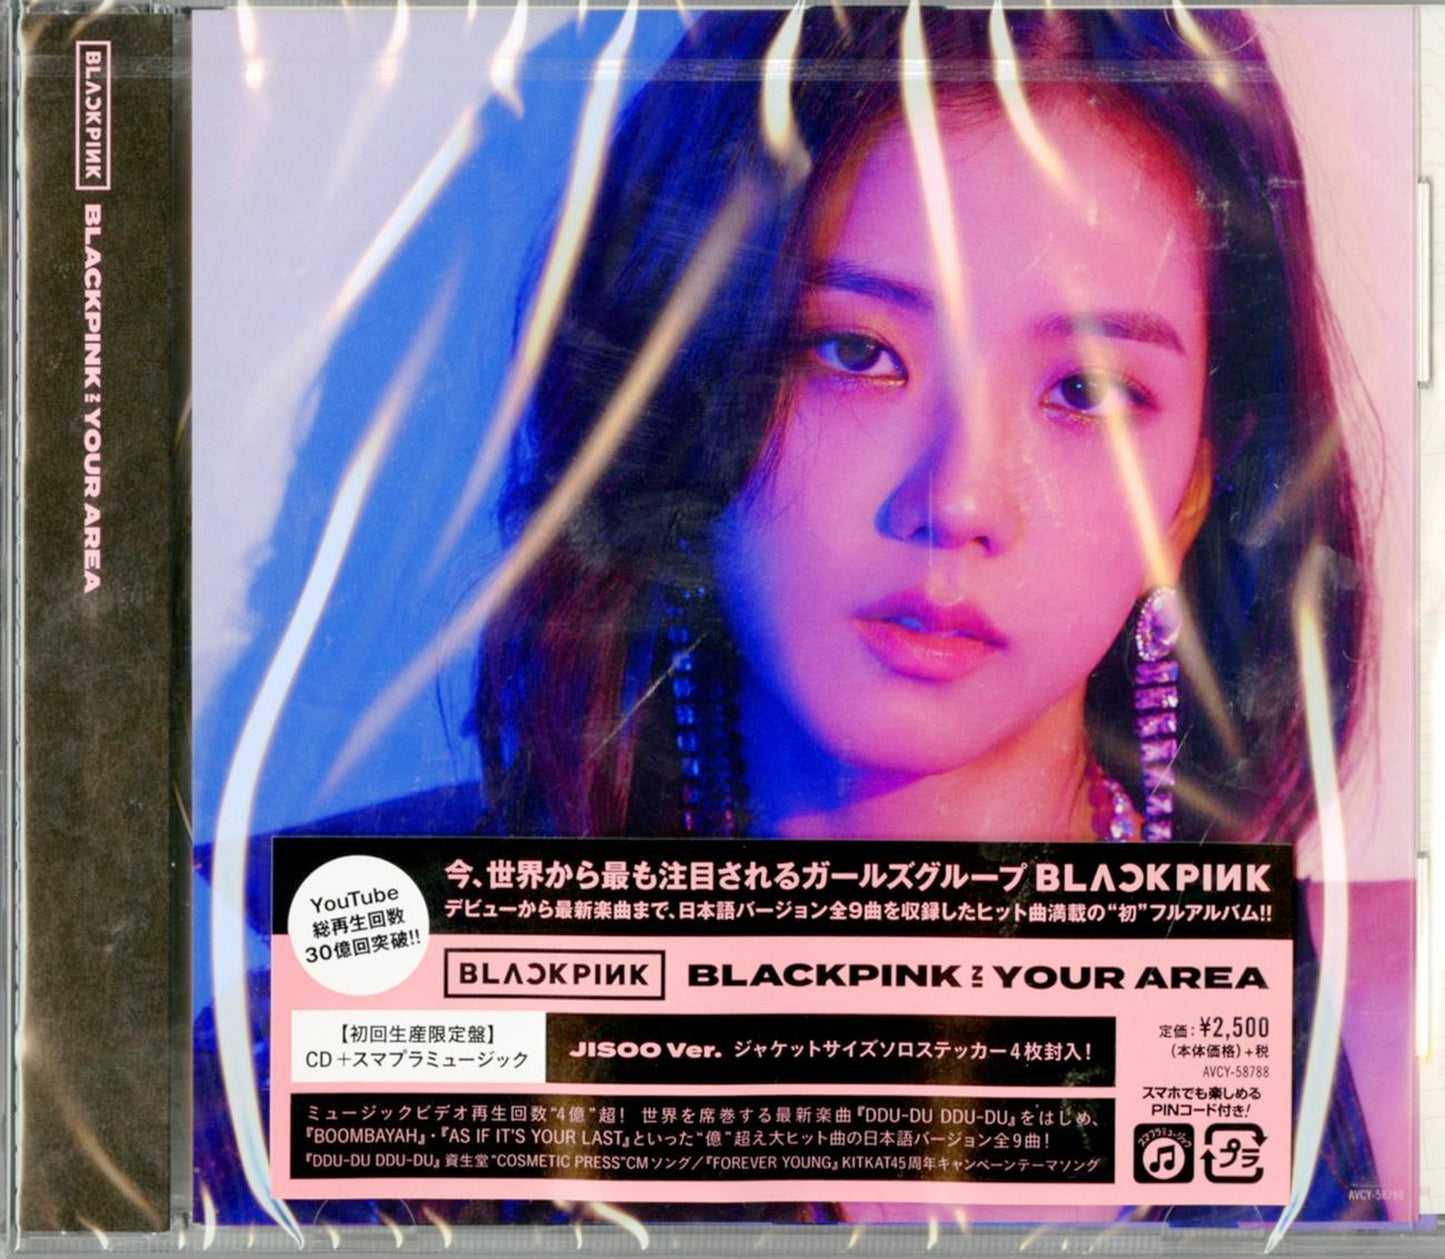 Blackpink - Blackpink In Your Area (Jisoo Ver.) - Japan  CD Limited Edition